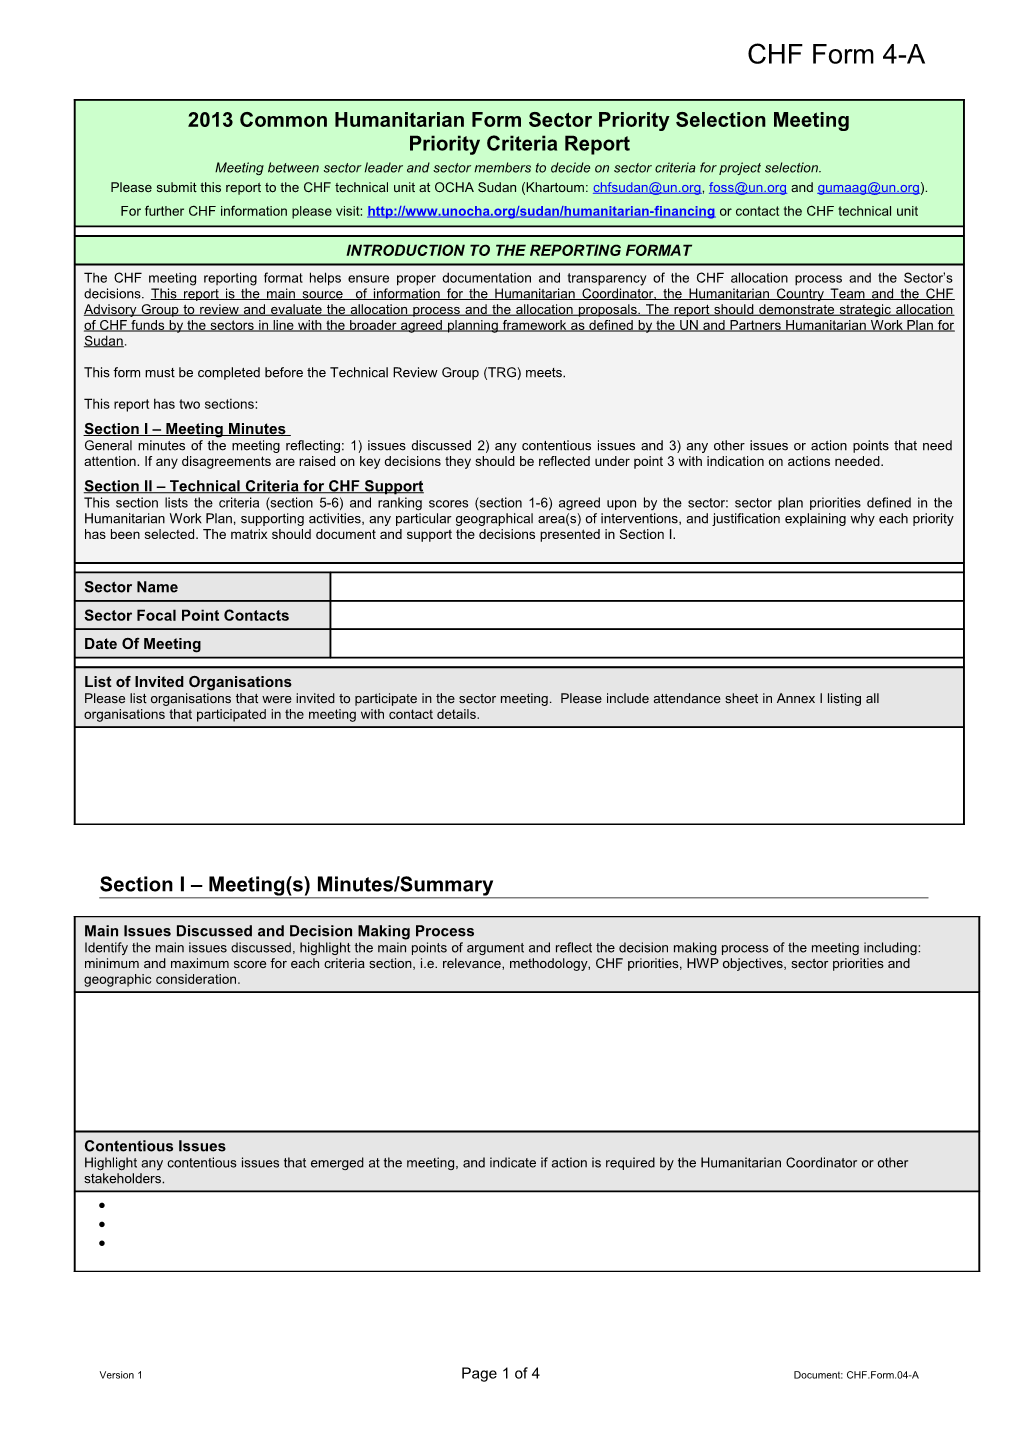 CHF 2012 Form 4-A Priority Criteria